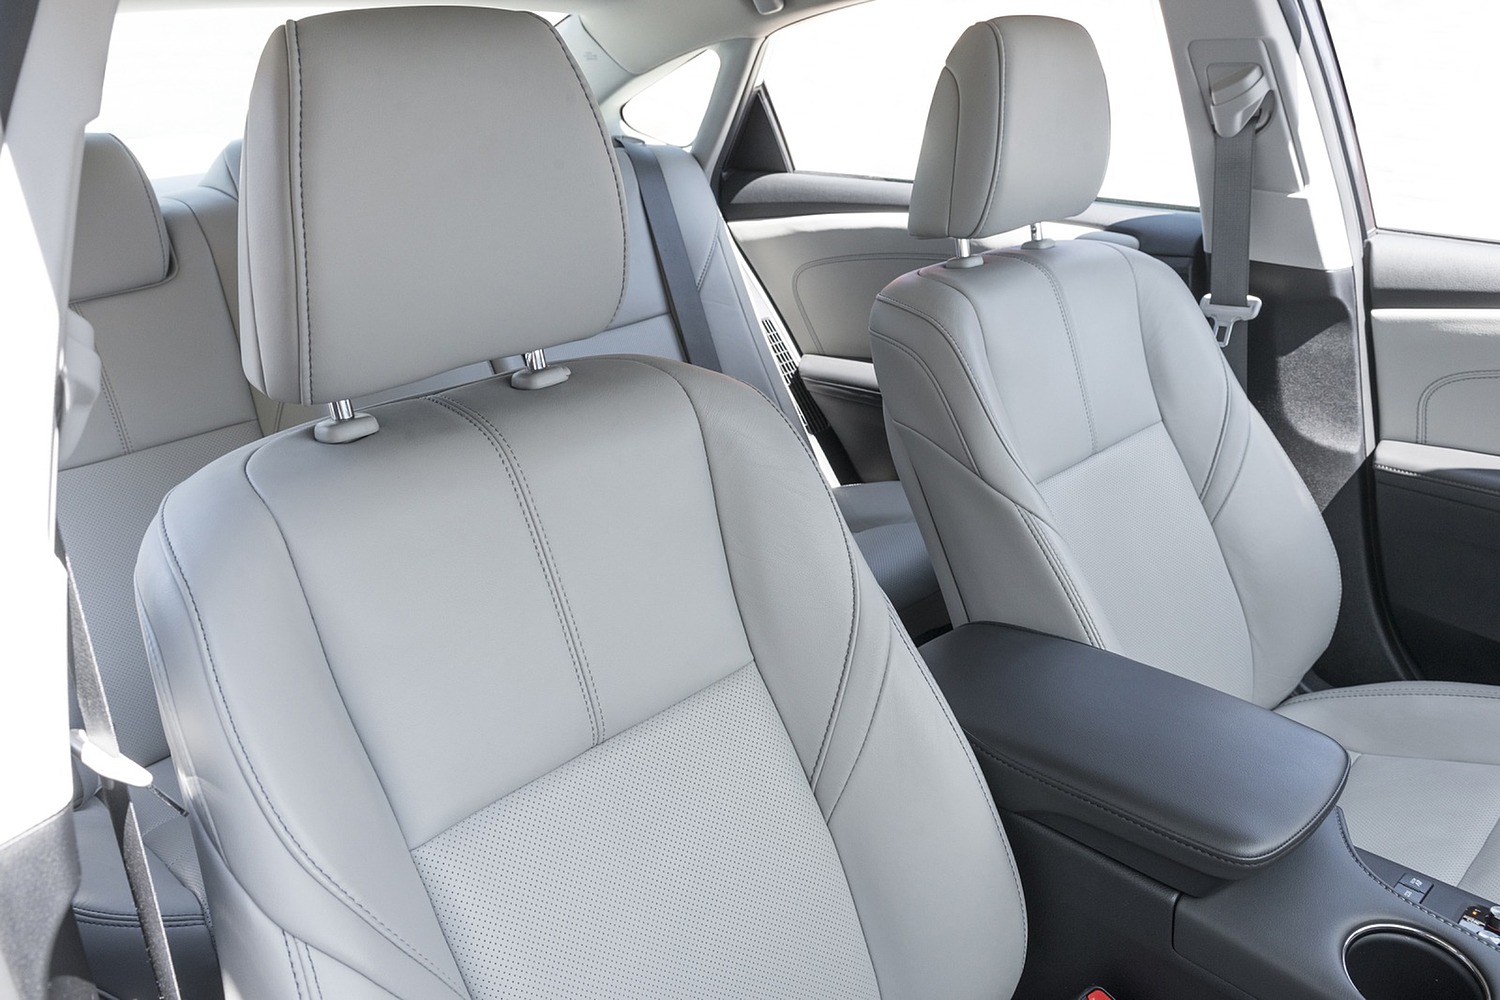 Toyota Avalon Hybrid Sedan Interior Detail (2017 model year shown)